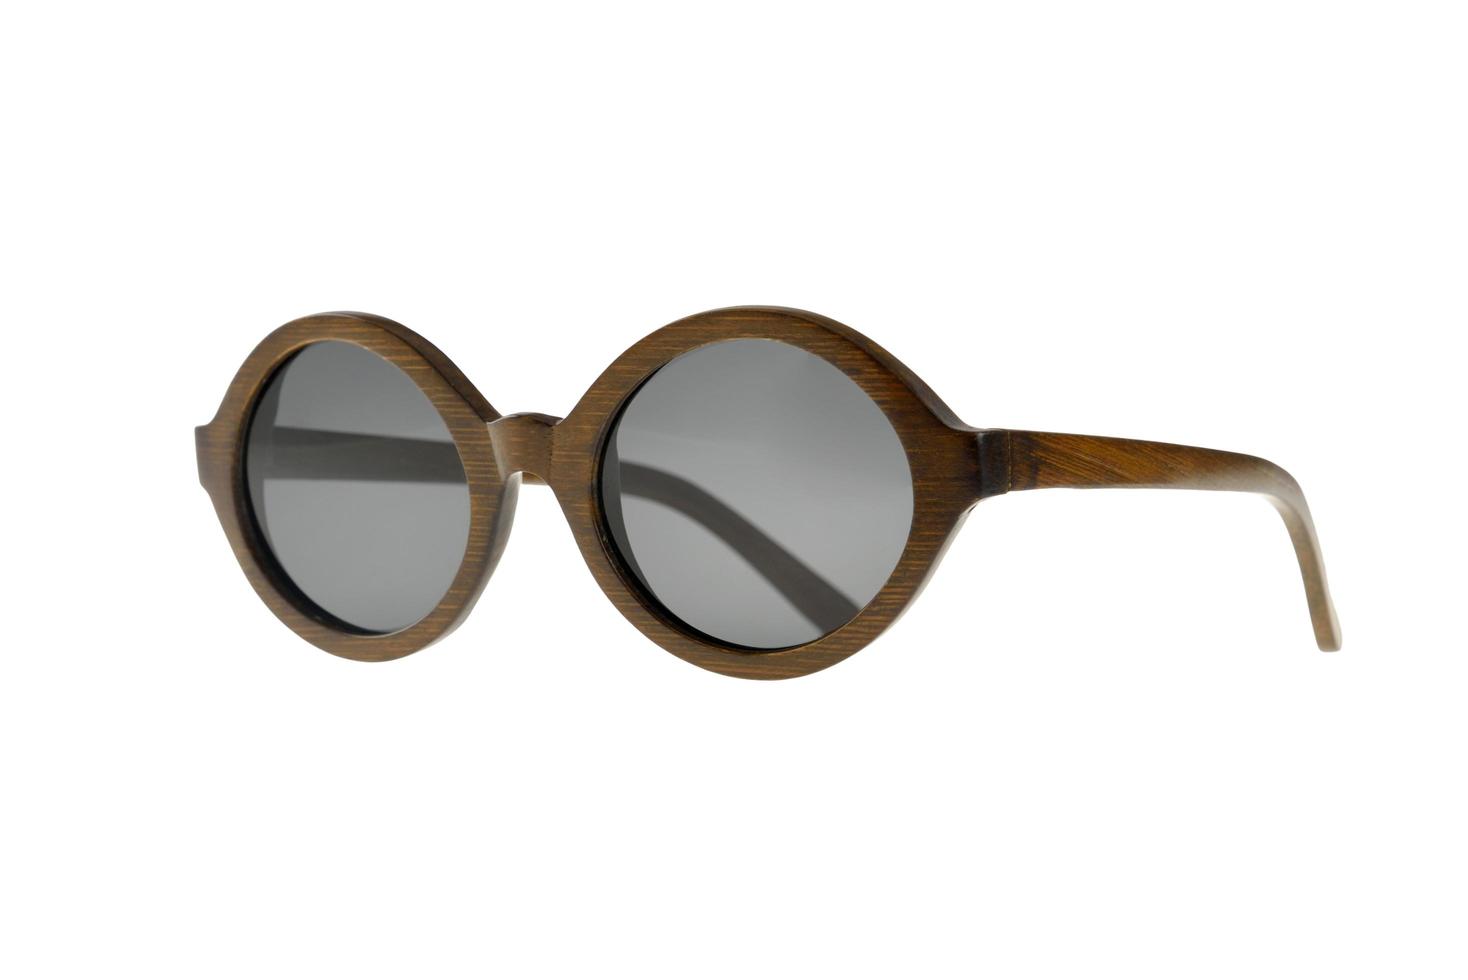 Round wood-framed sunglasses photo